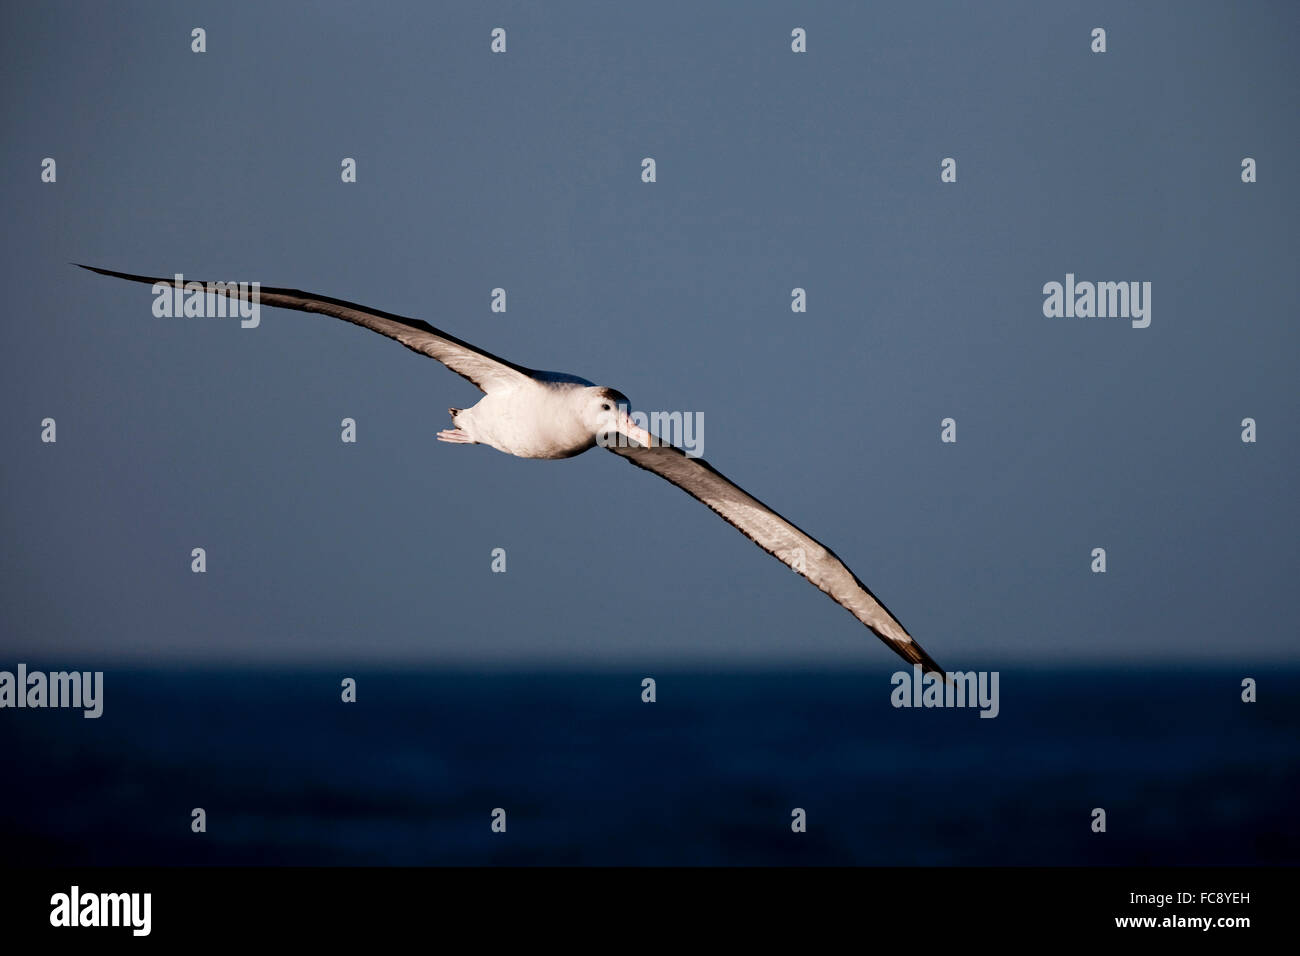 Gibson Albatross (Diomedea antipodensis gibsoni) in volo sopra il mare. Antarktis. Kein Exklusivverkauf moeglich Foto Stock